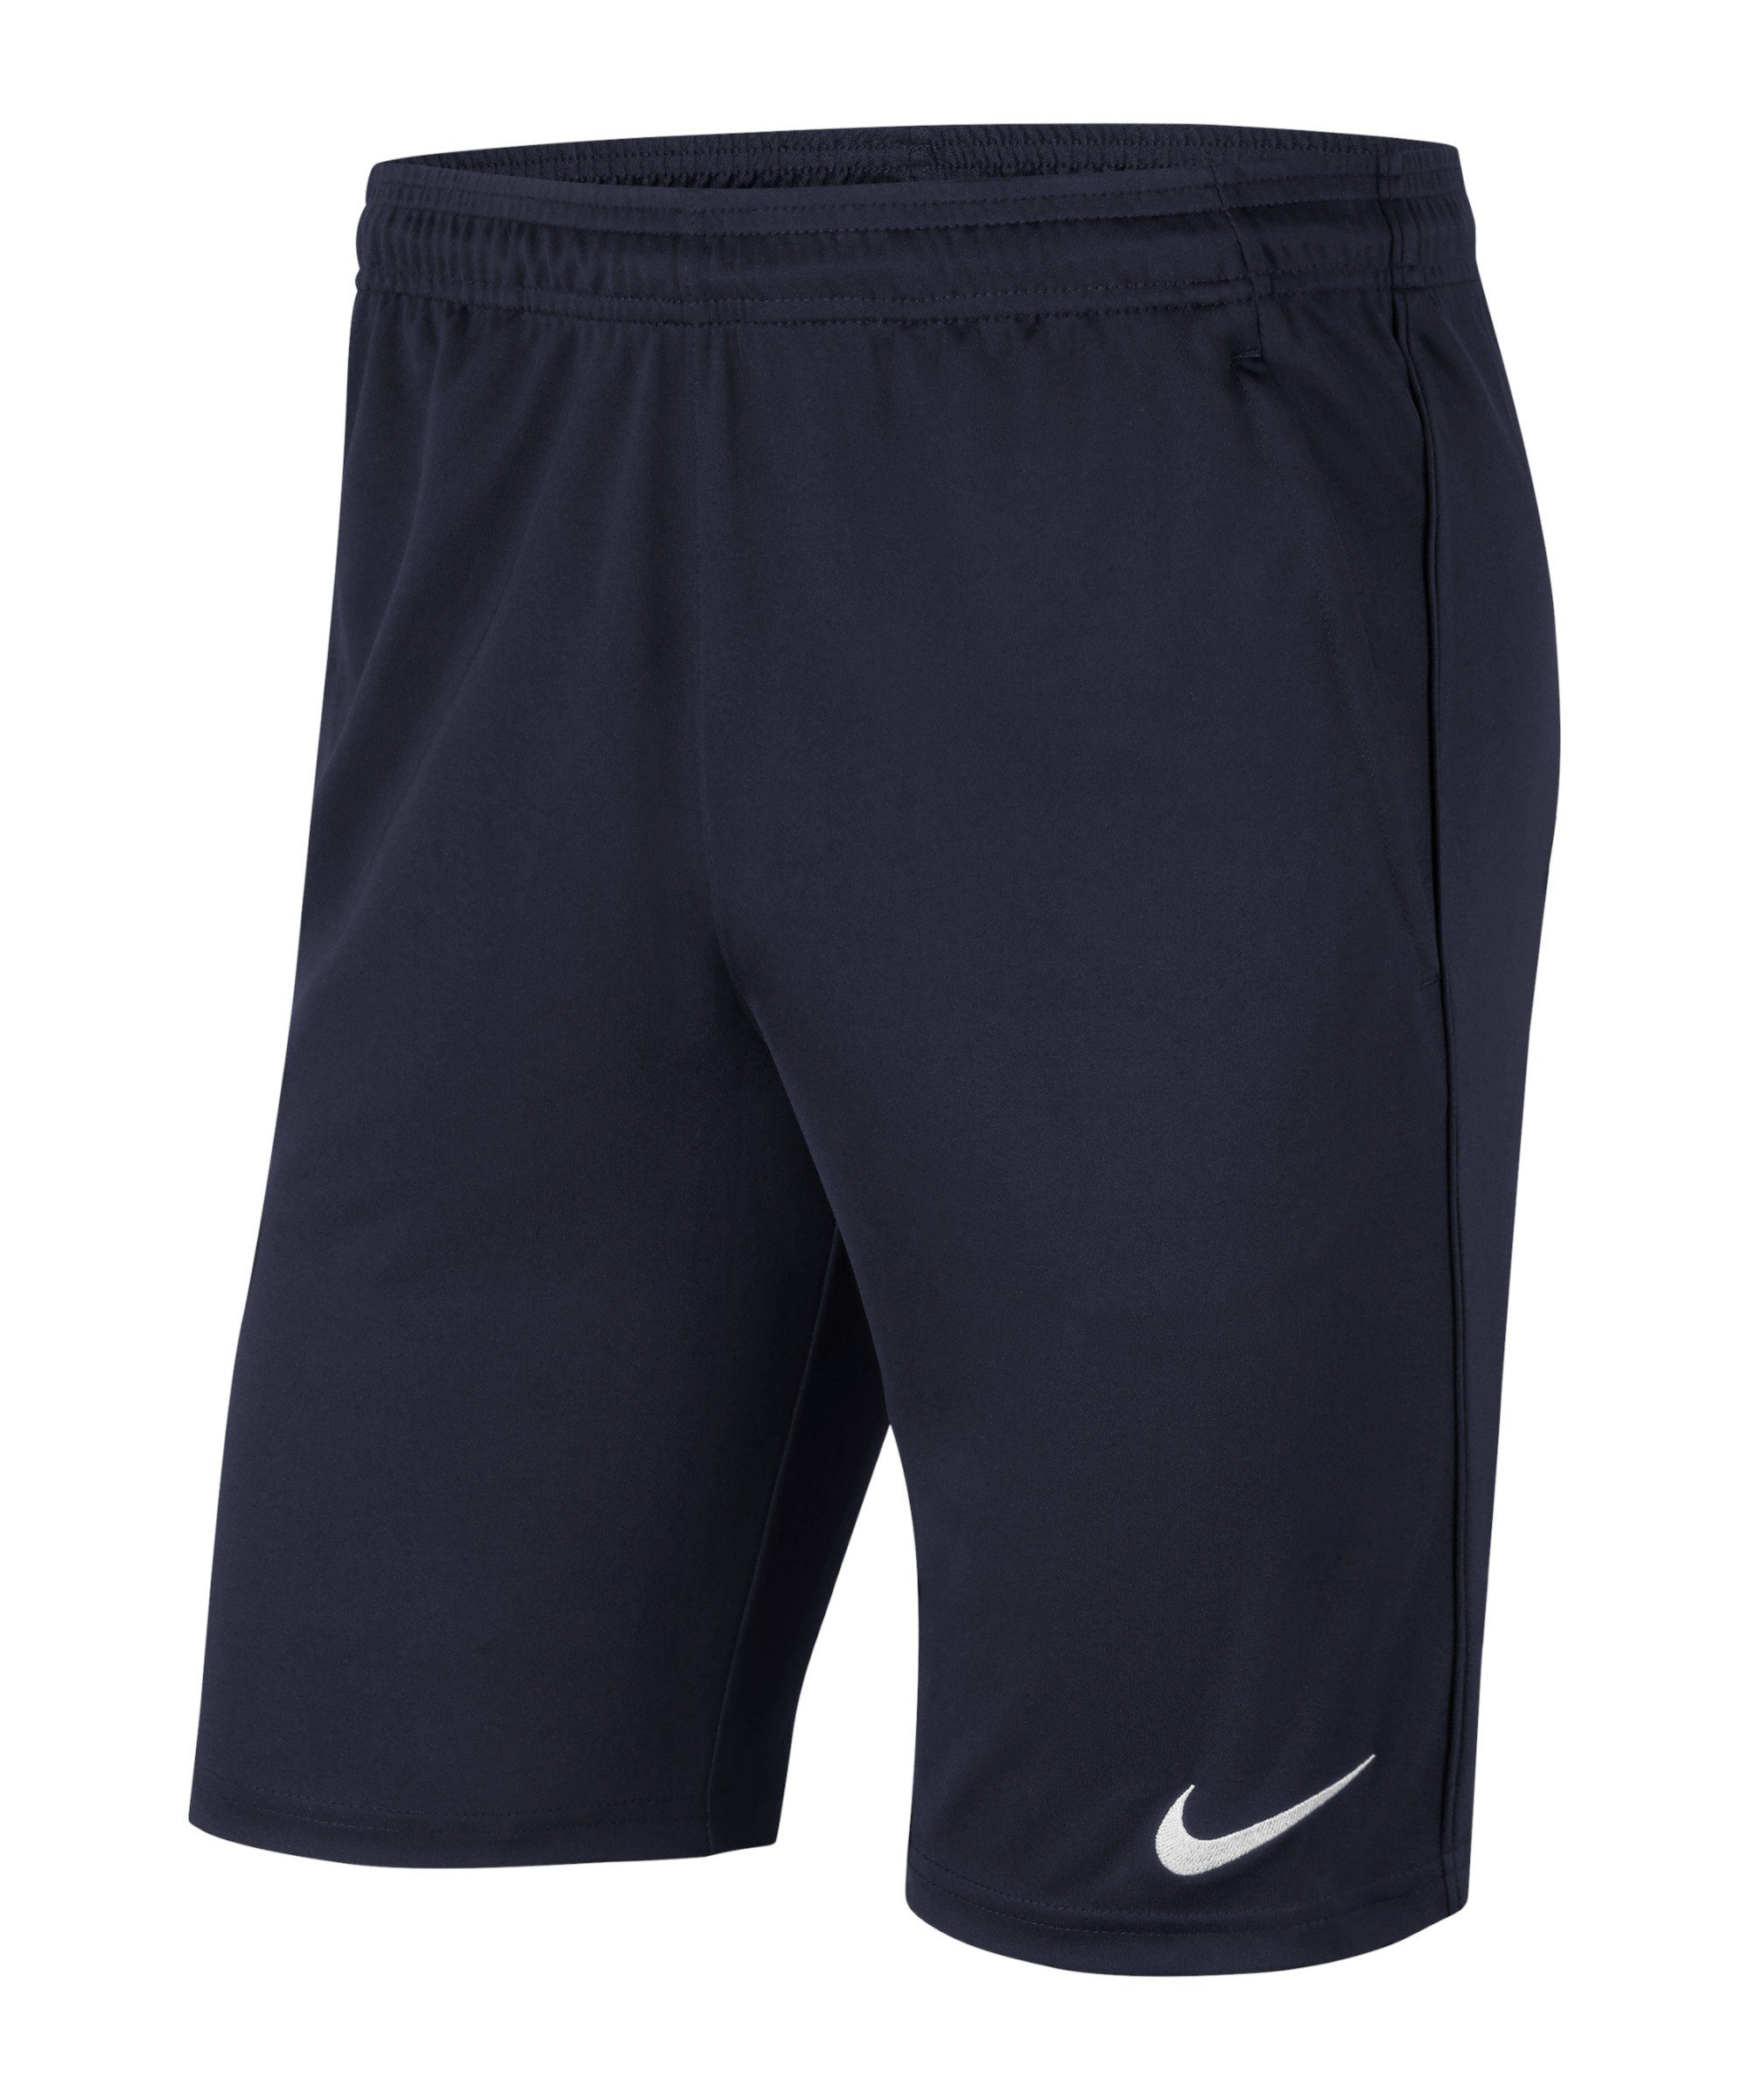 Sporthose Nike Knit 20 Park Short blauweiss